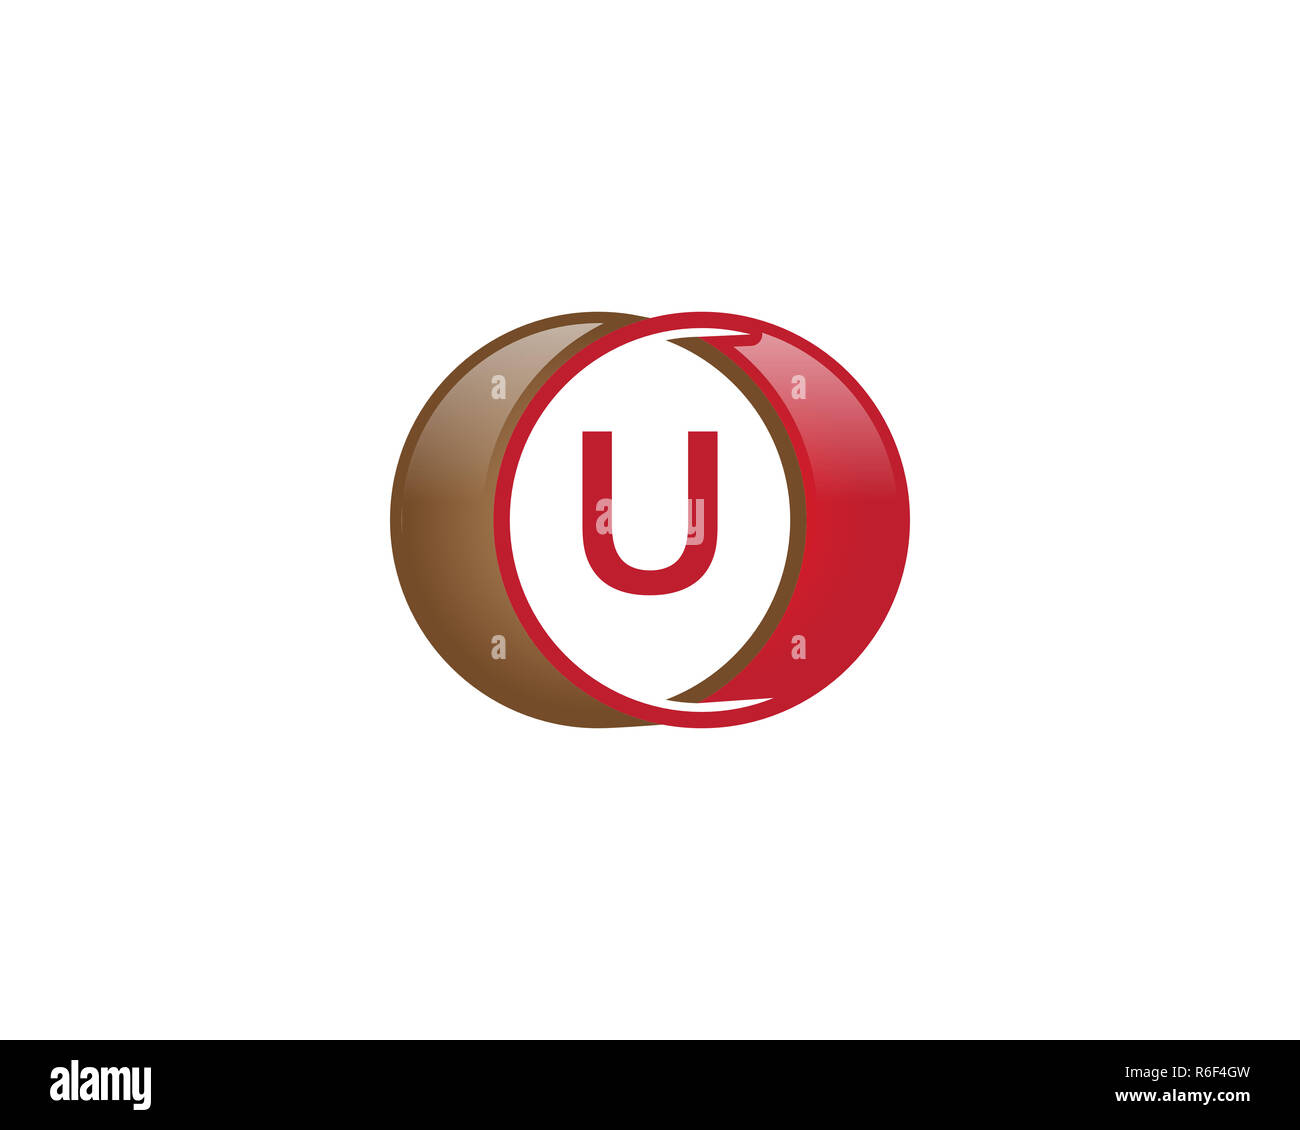 u letter circle logo Stock Photo